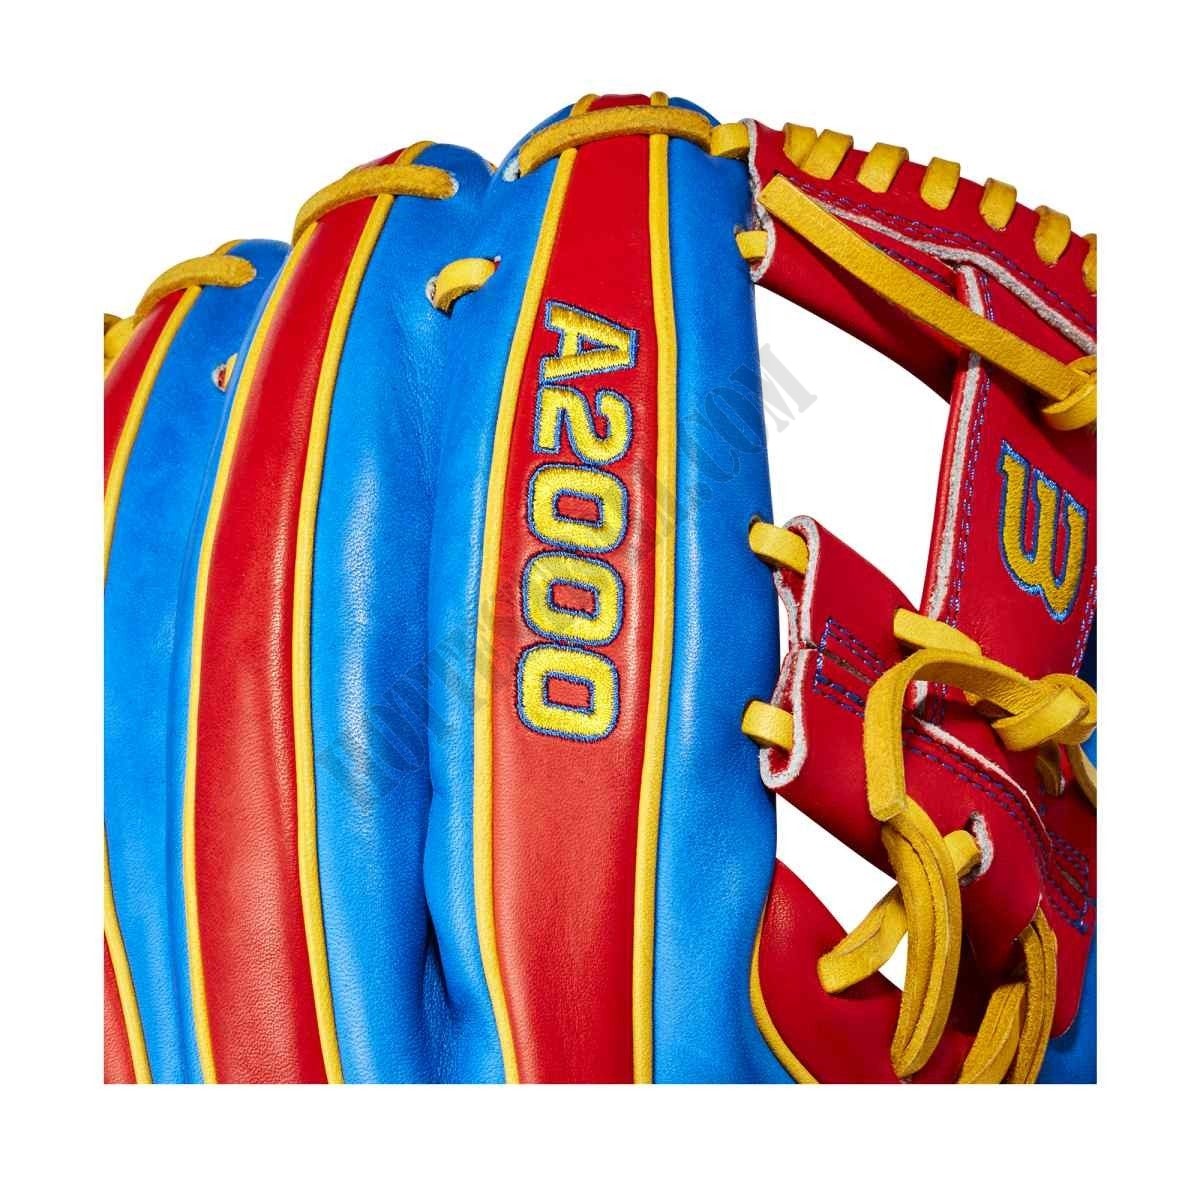 2021 A2000 1786 Venezuela 11.5" Infield Baseball Glove - Limited Edition ● Wilson Promotions - -6